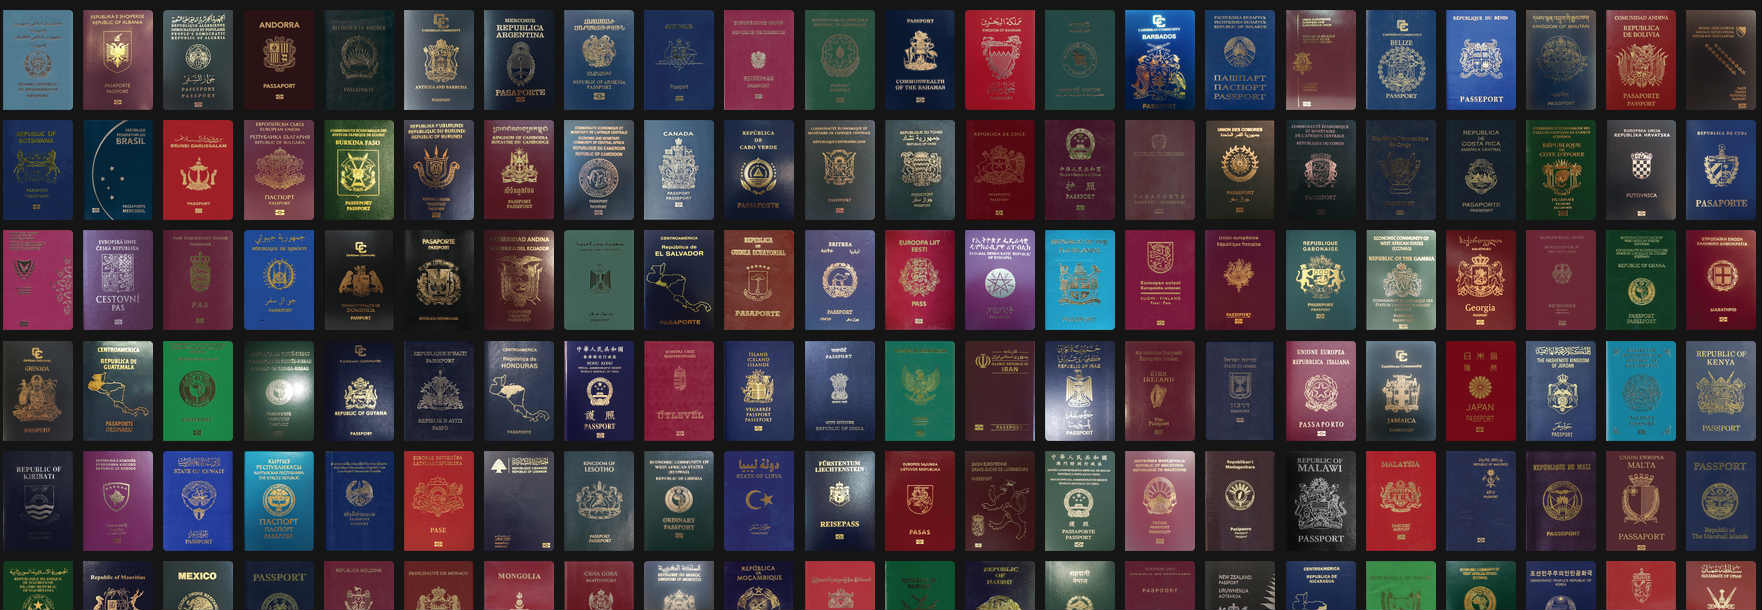 pasaportes-mundo-mas-poderosos-indice-mundial-acceso-extranjero